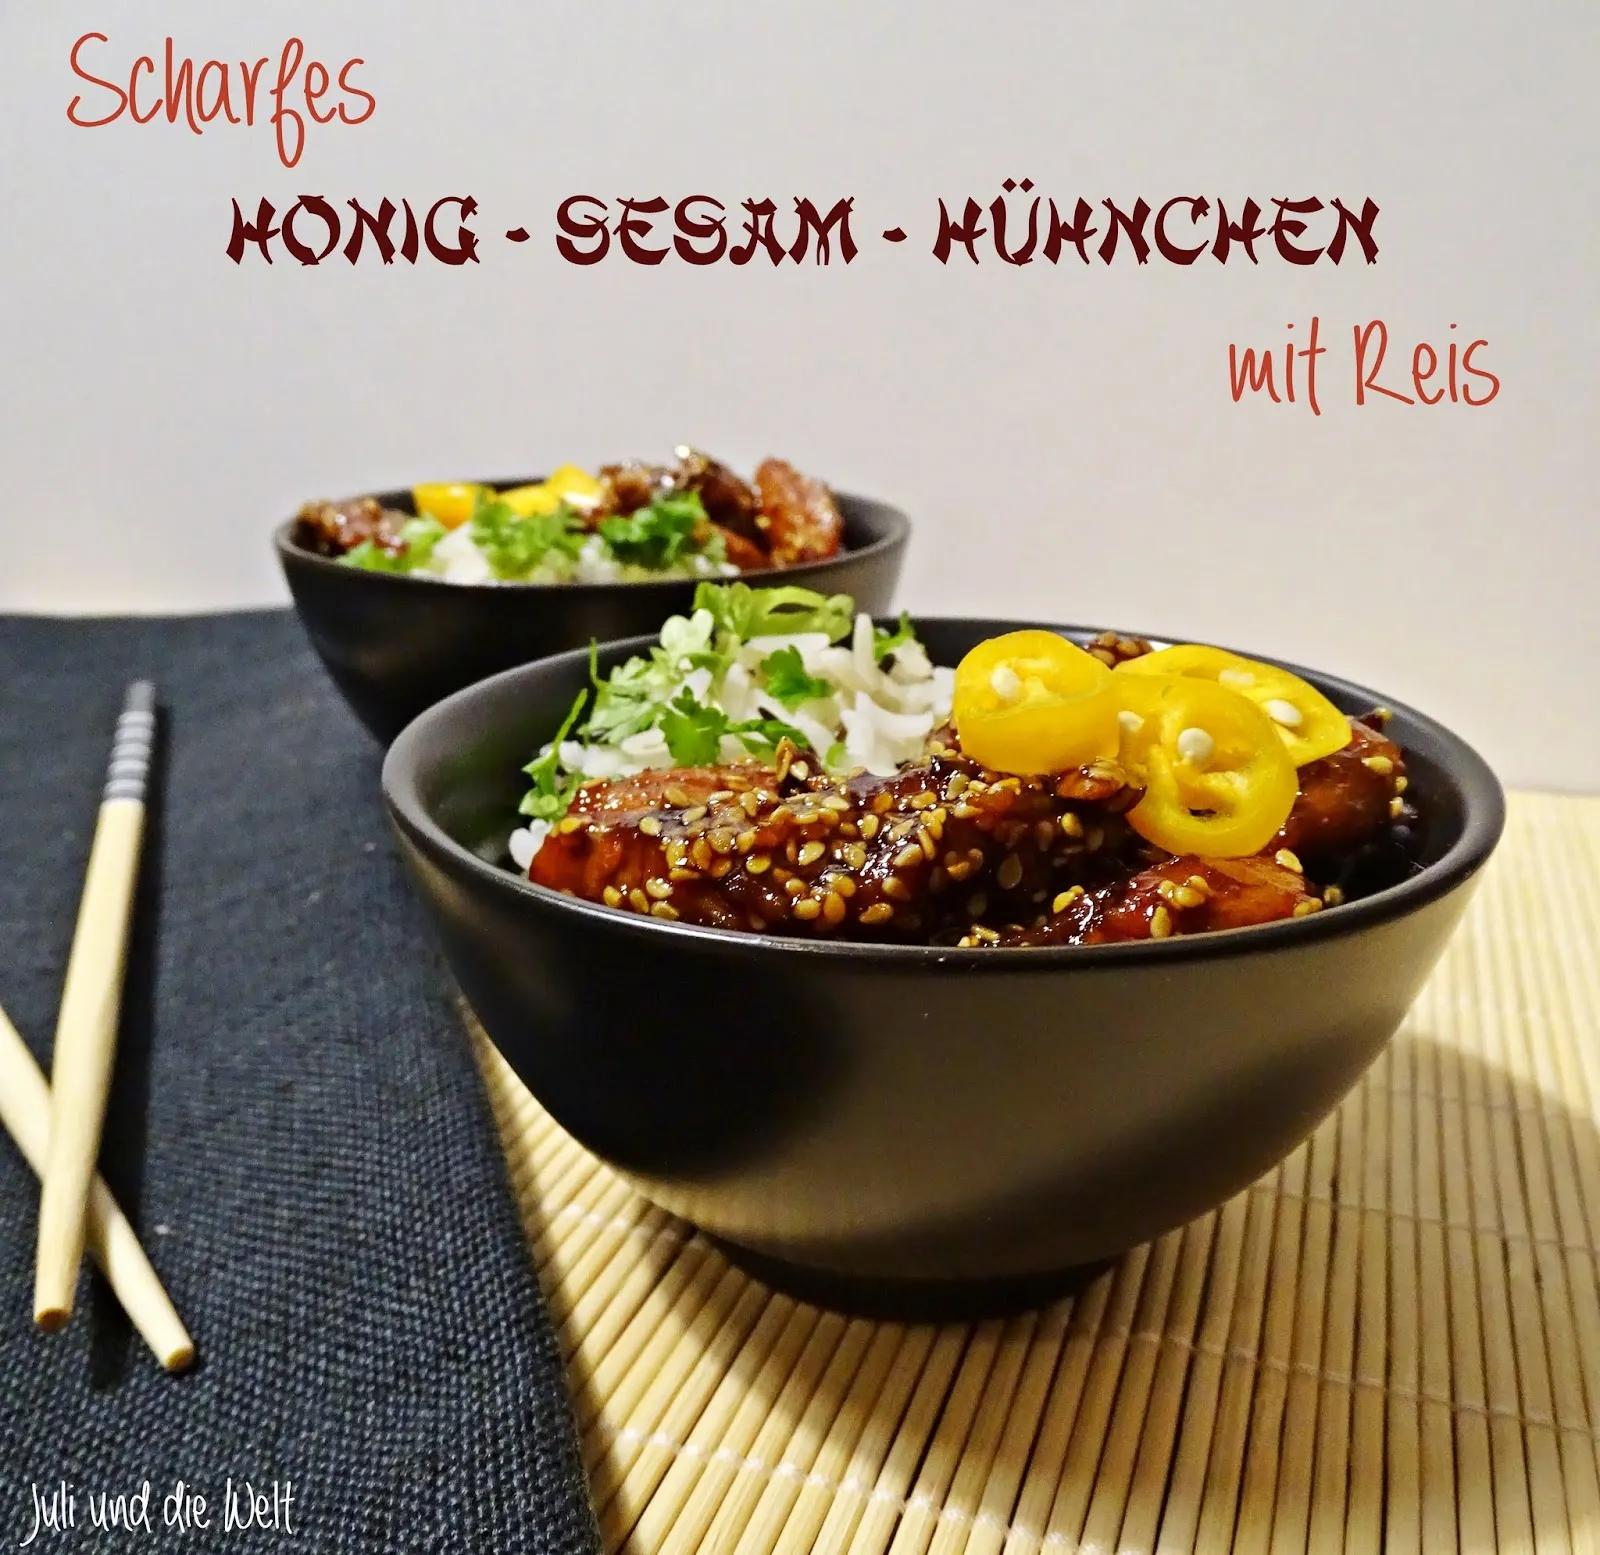 Scharfes Honig - Sesam - Hühnchen mit Reis {Fernweh-Freitag}